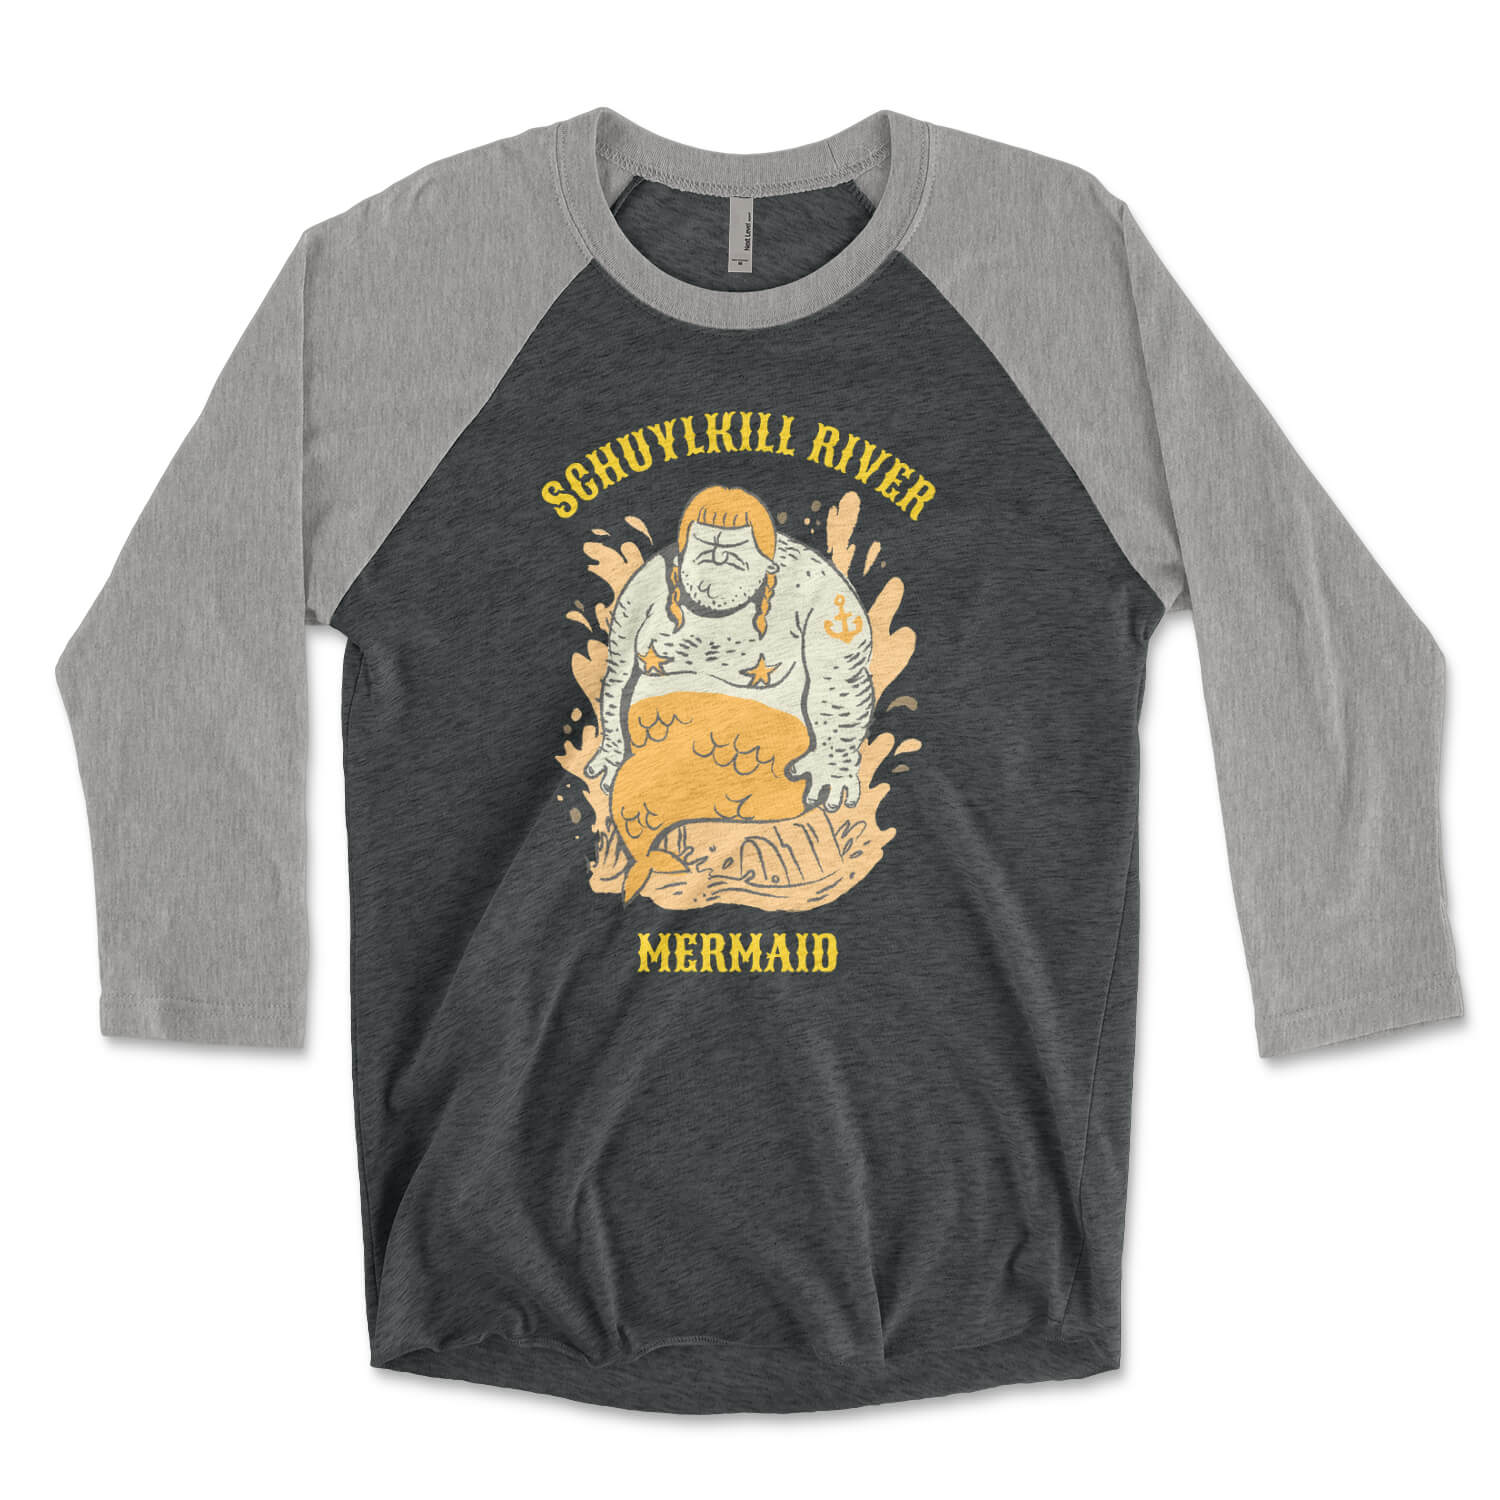 Schuylkill River Mermaid funny Philadelphia heather grey and vintage black raglan tee shirt from Phillygoat